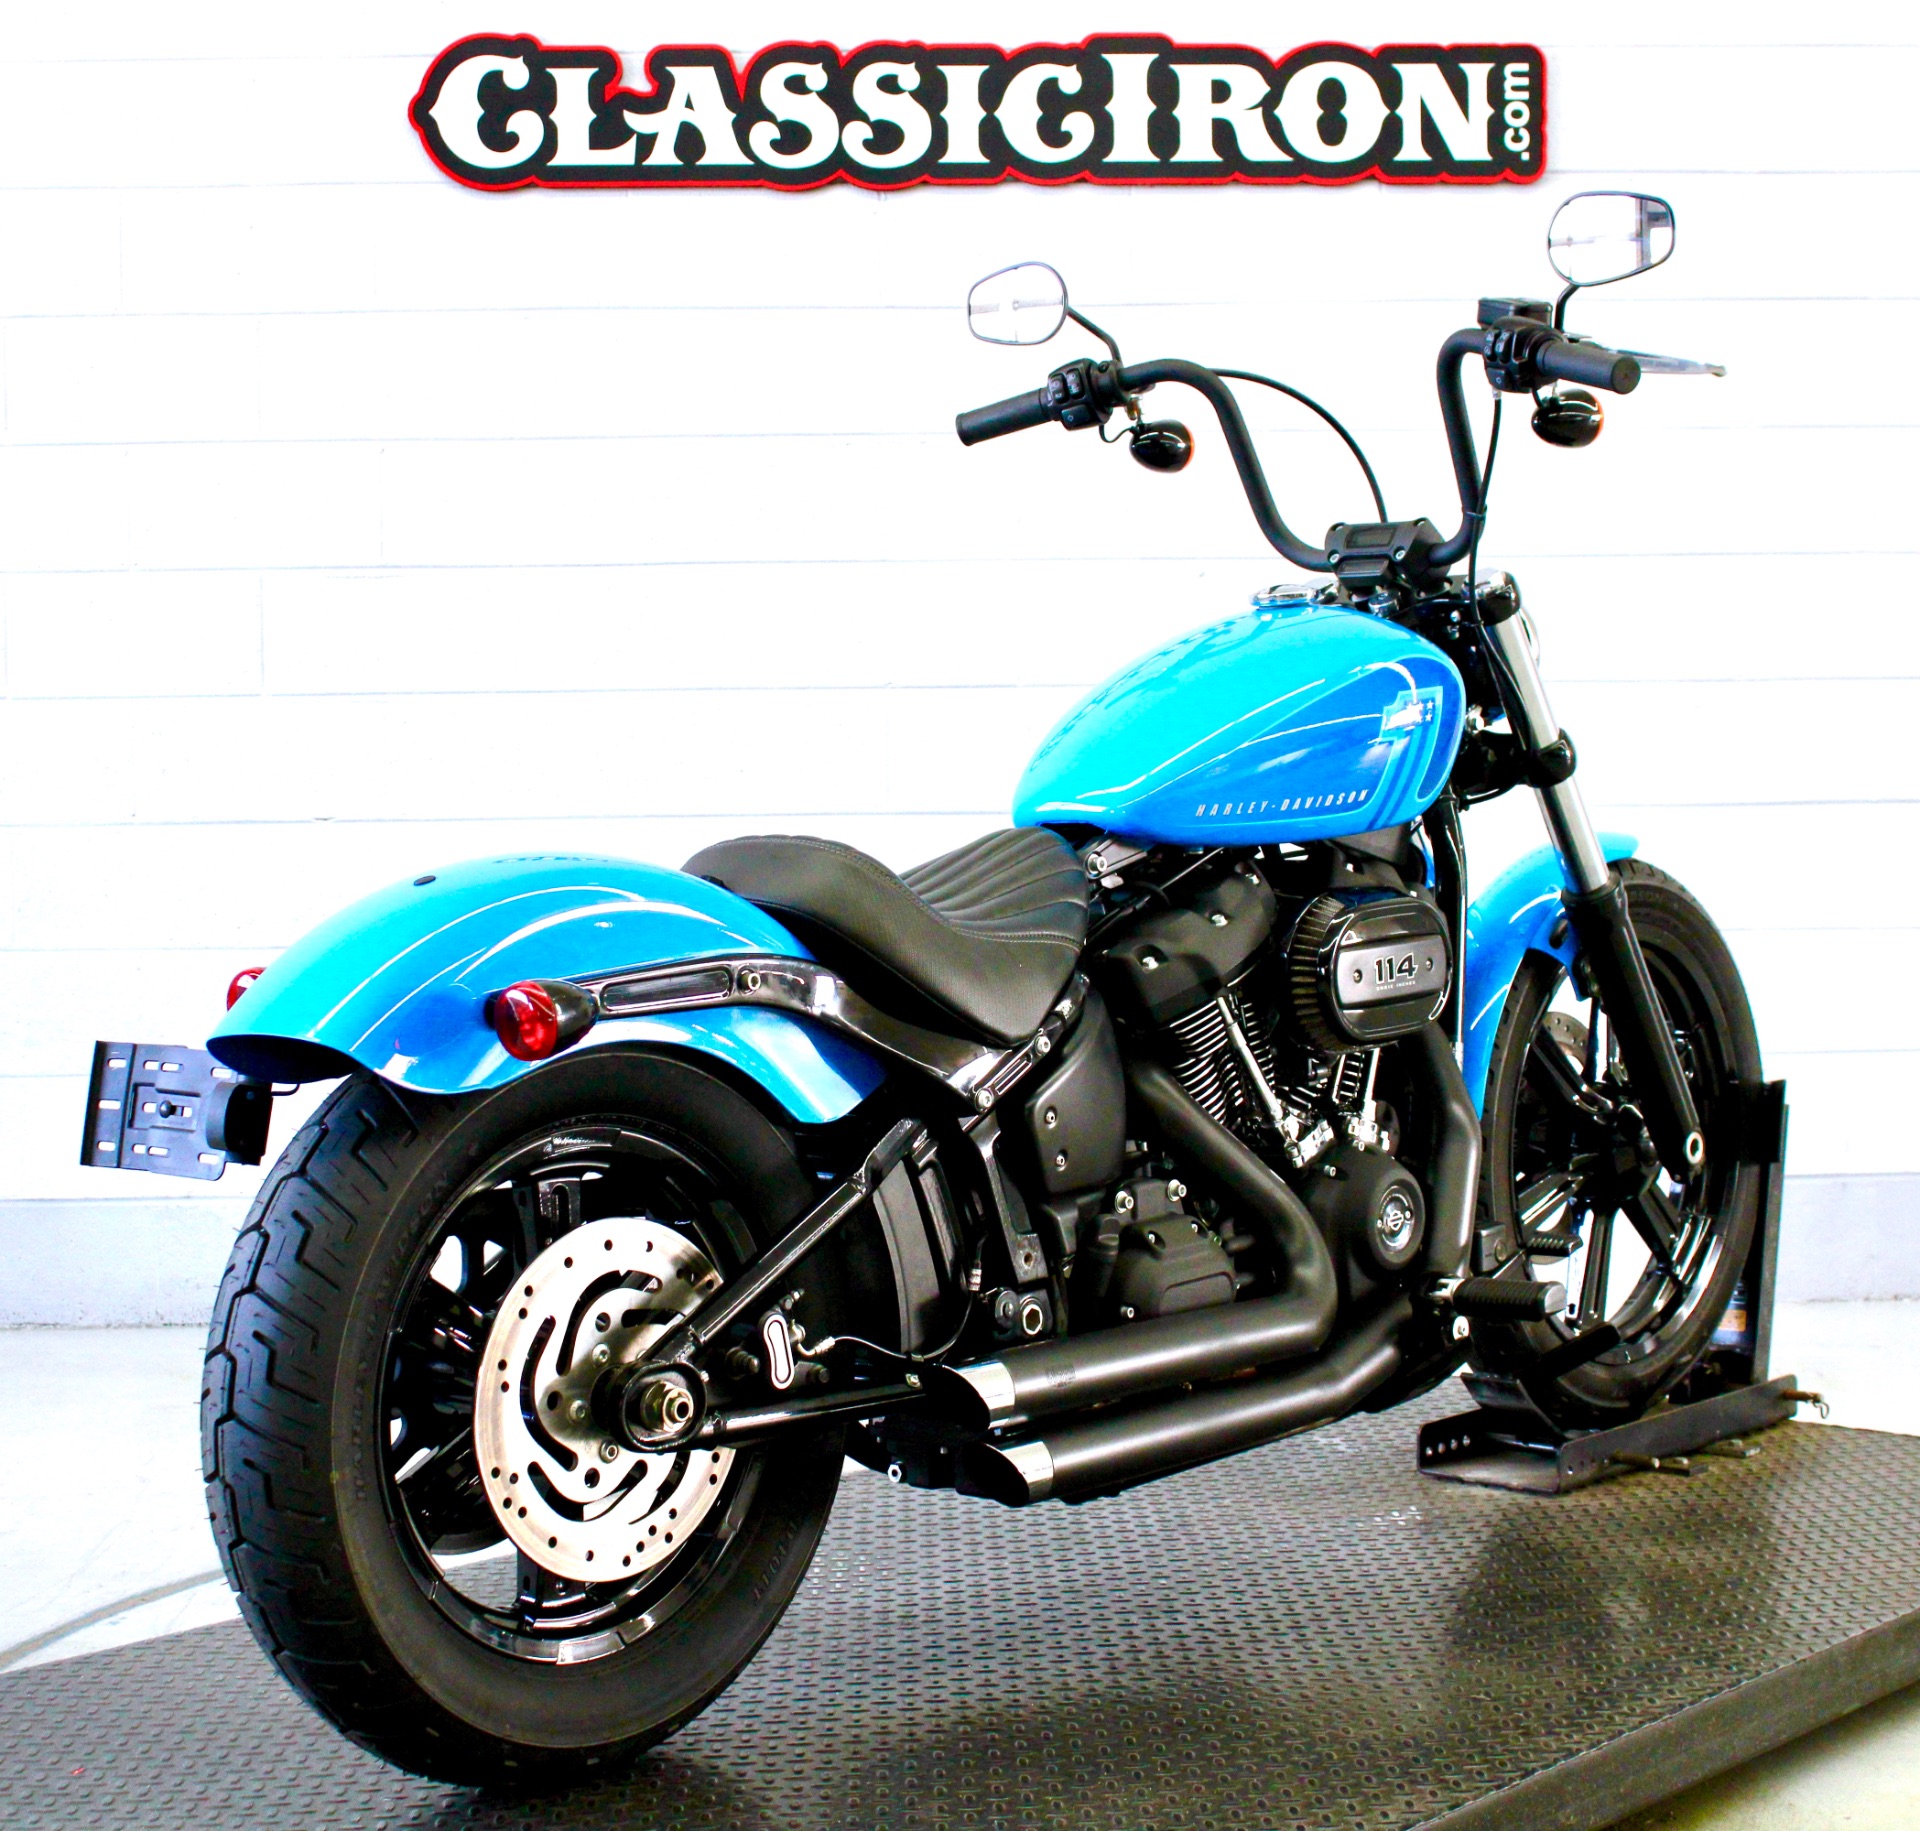 2022 Harley-Davidson Street Bob® 114 in Fredericksburg, Virginia - Photo 5